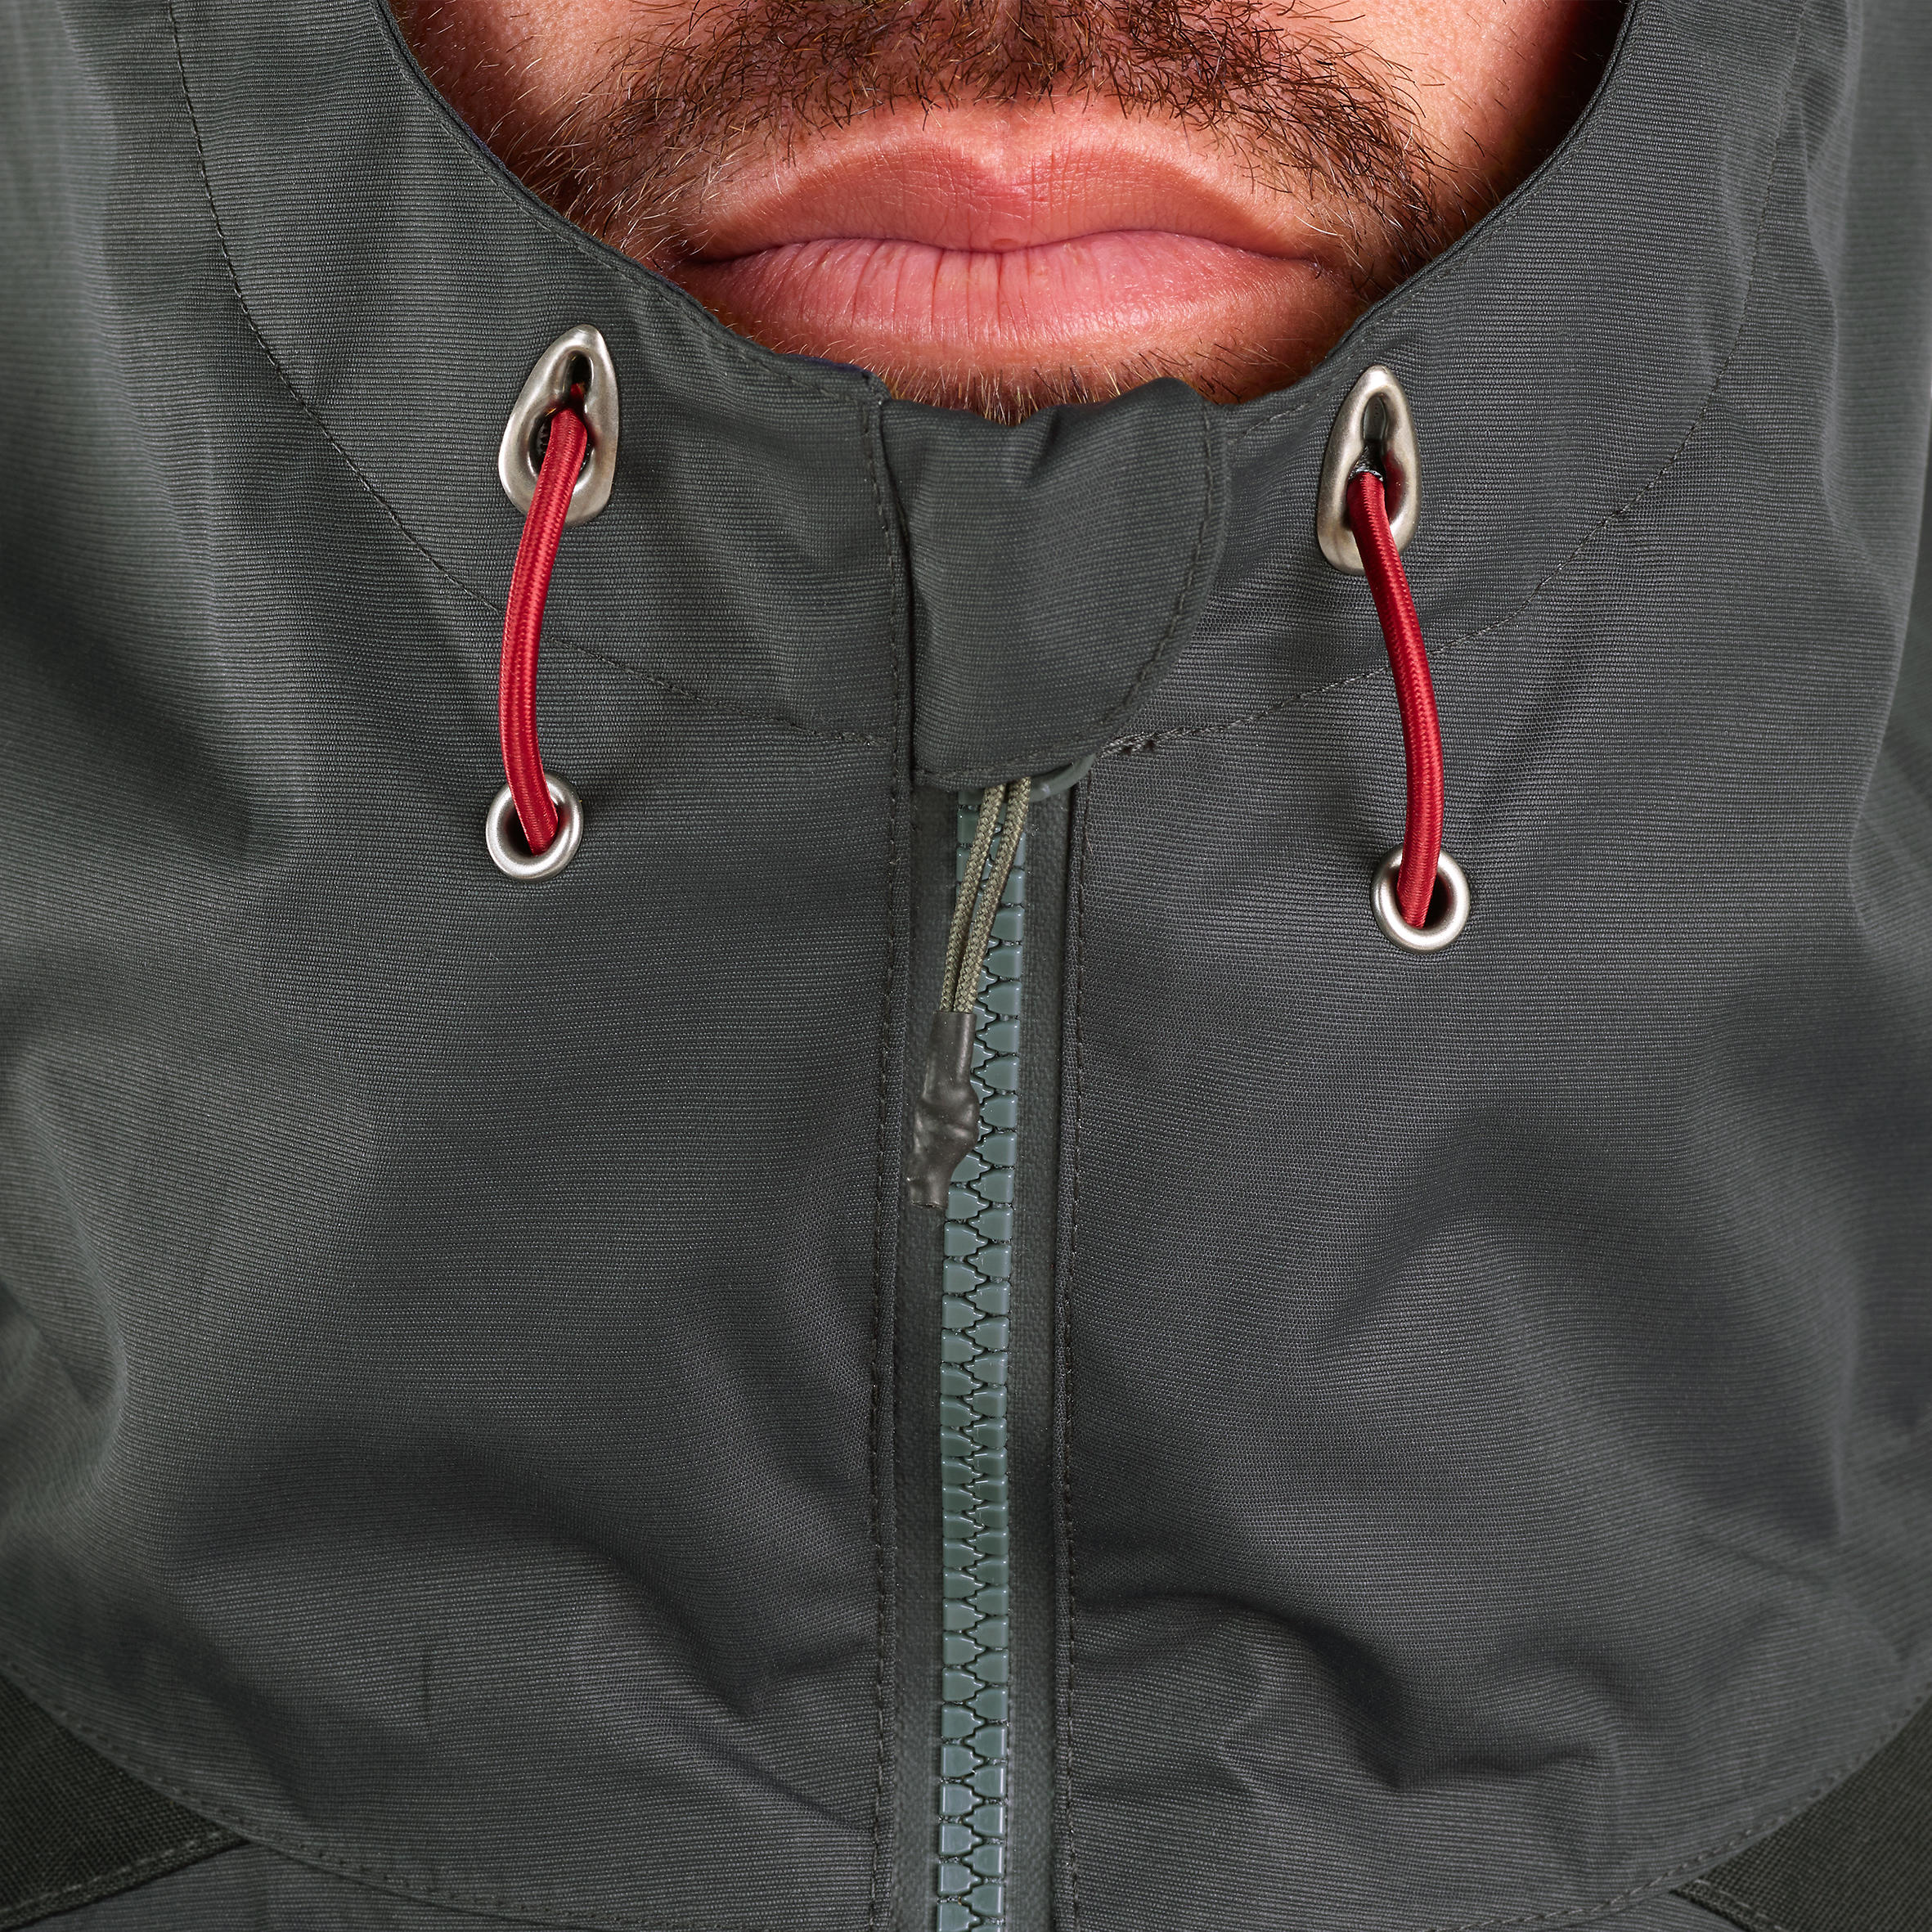 Waterproof fishing jacket 500 Khaki 8/8